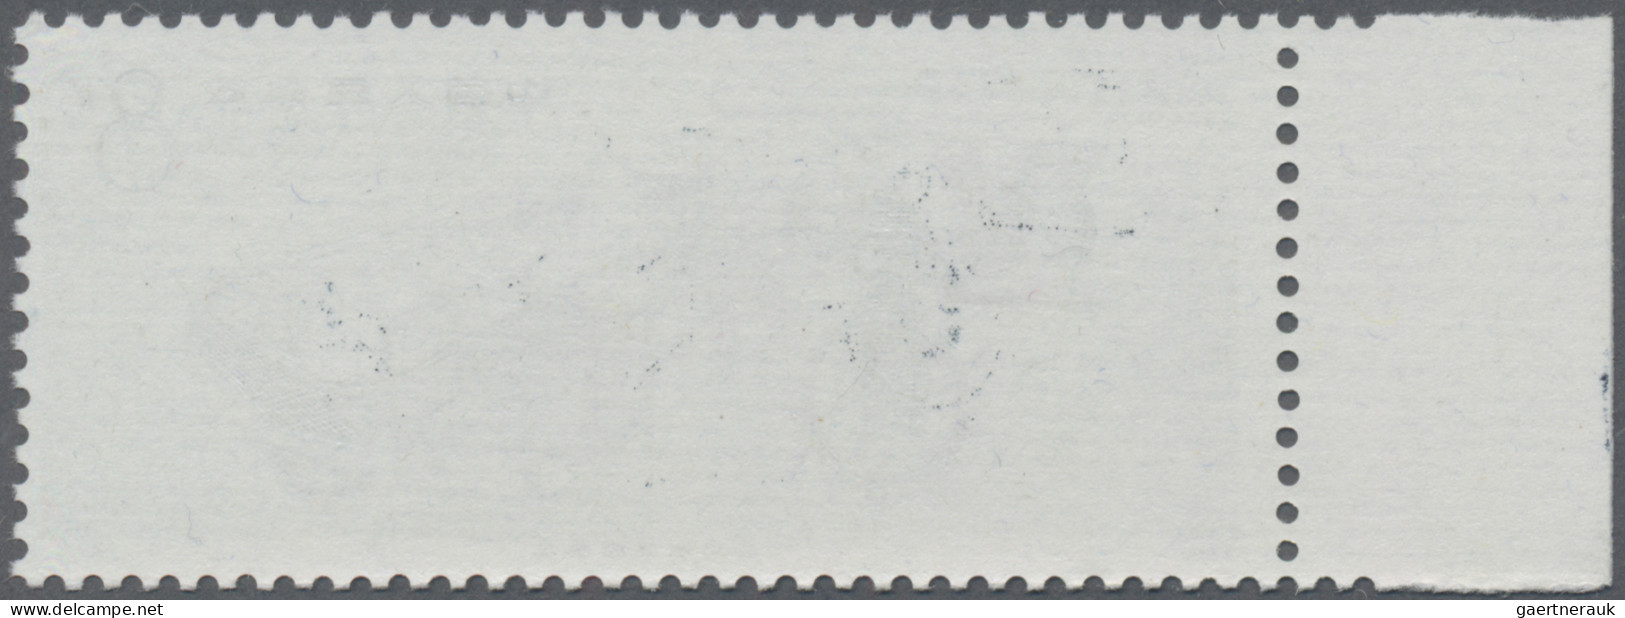 China (PRC): 1974, Machine Construction Set (N78-81),MNH, With Margin, Stamp B1 - Nuovi